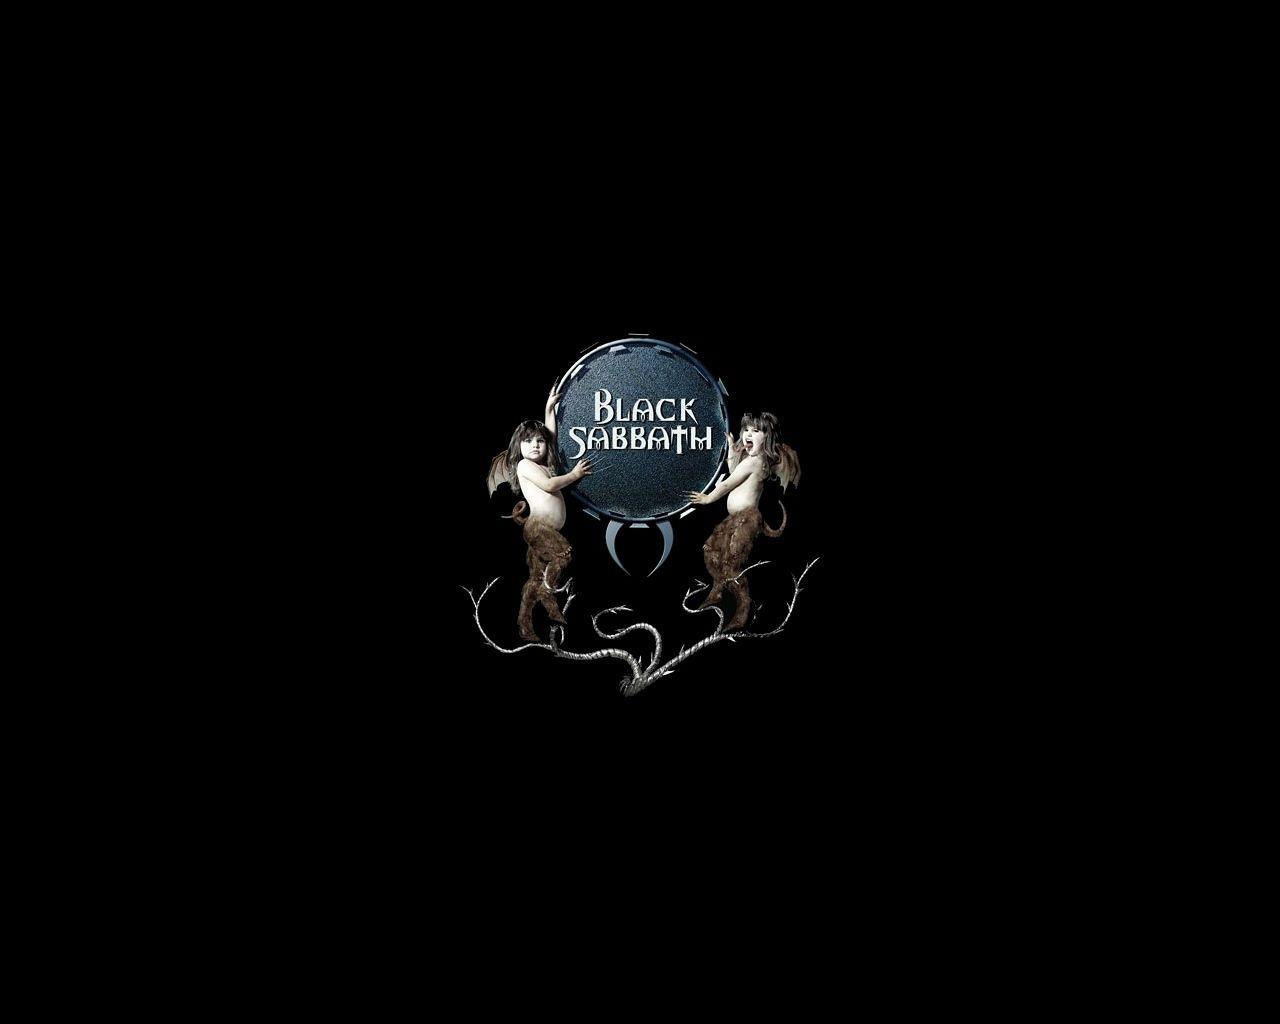 Music Black Sabbath Wallpapers 1280x1024 px Free Download